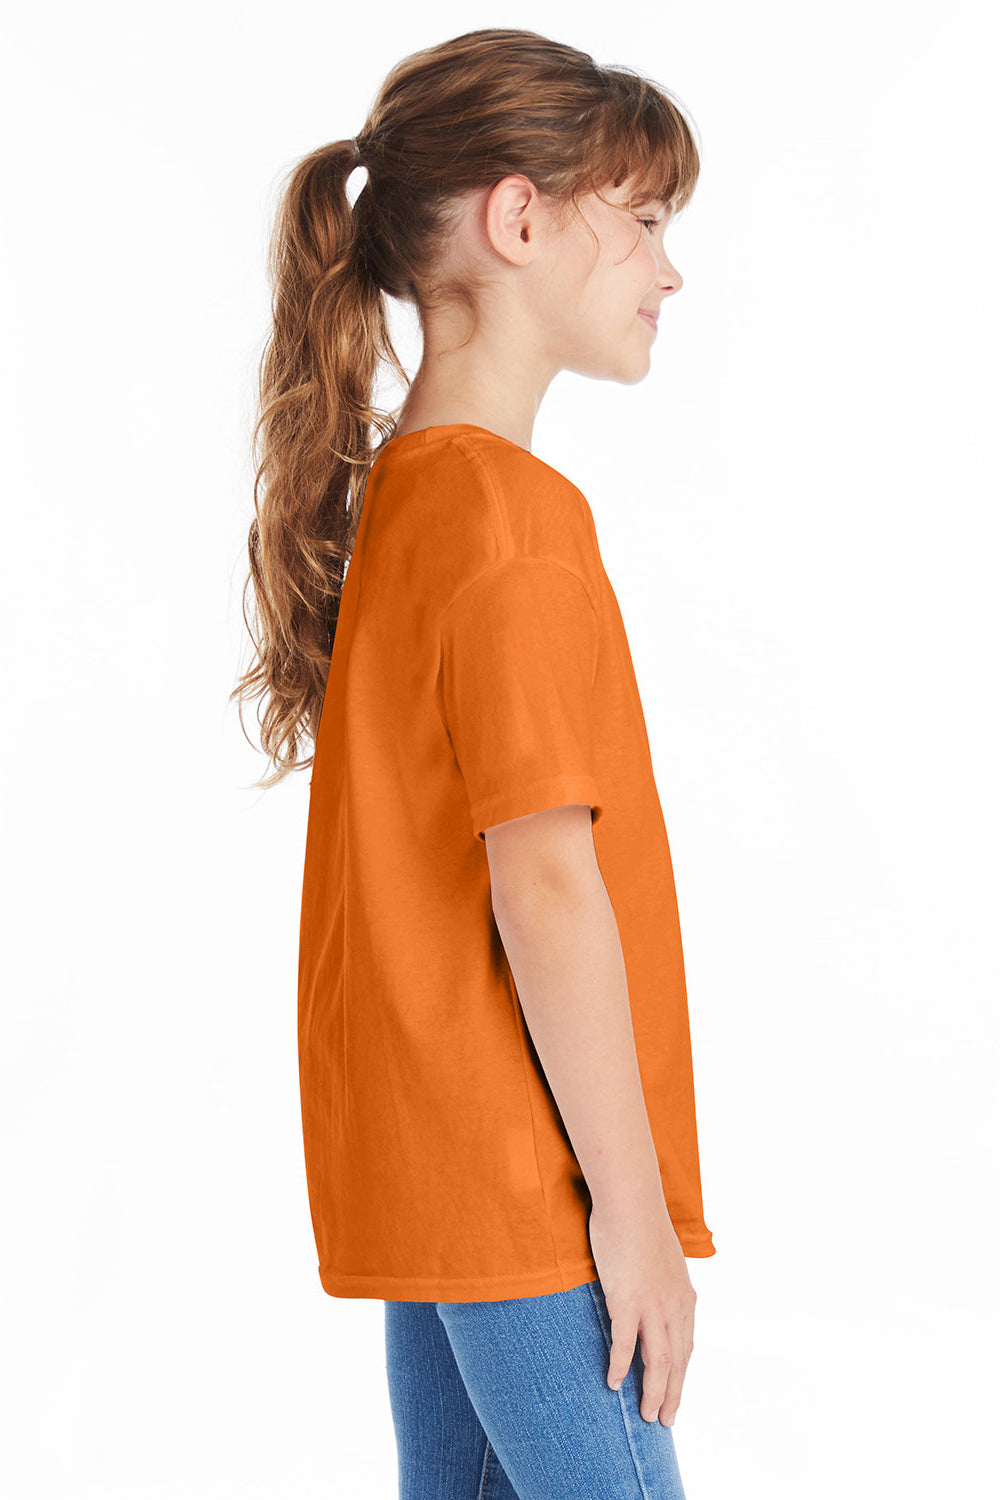 Hanes 5480 Youth ComfortSoft Short Sleeve Crewneck T-Shirt Tennessee Orange SIde